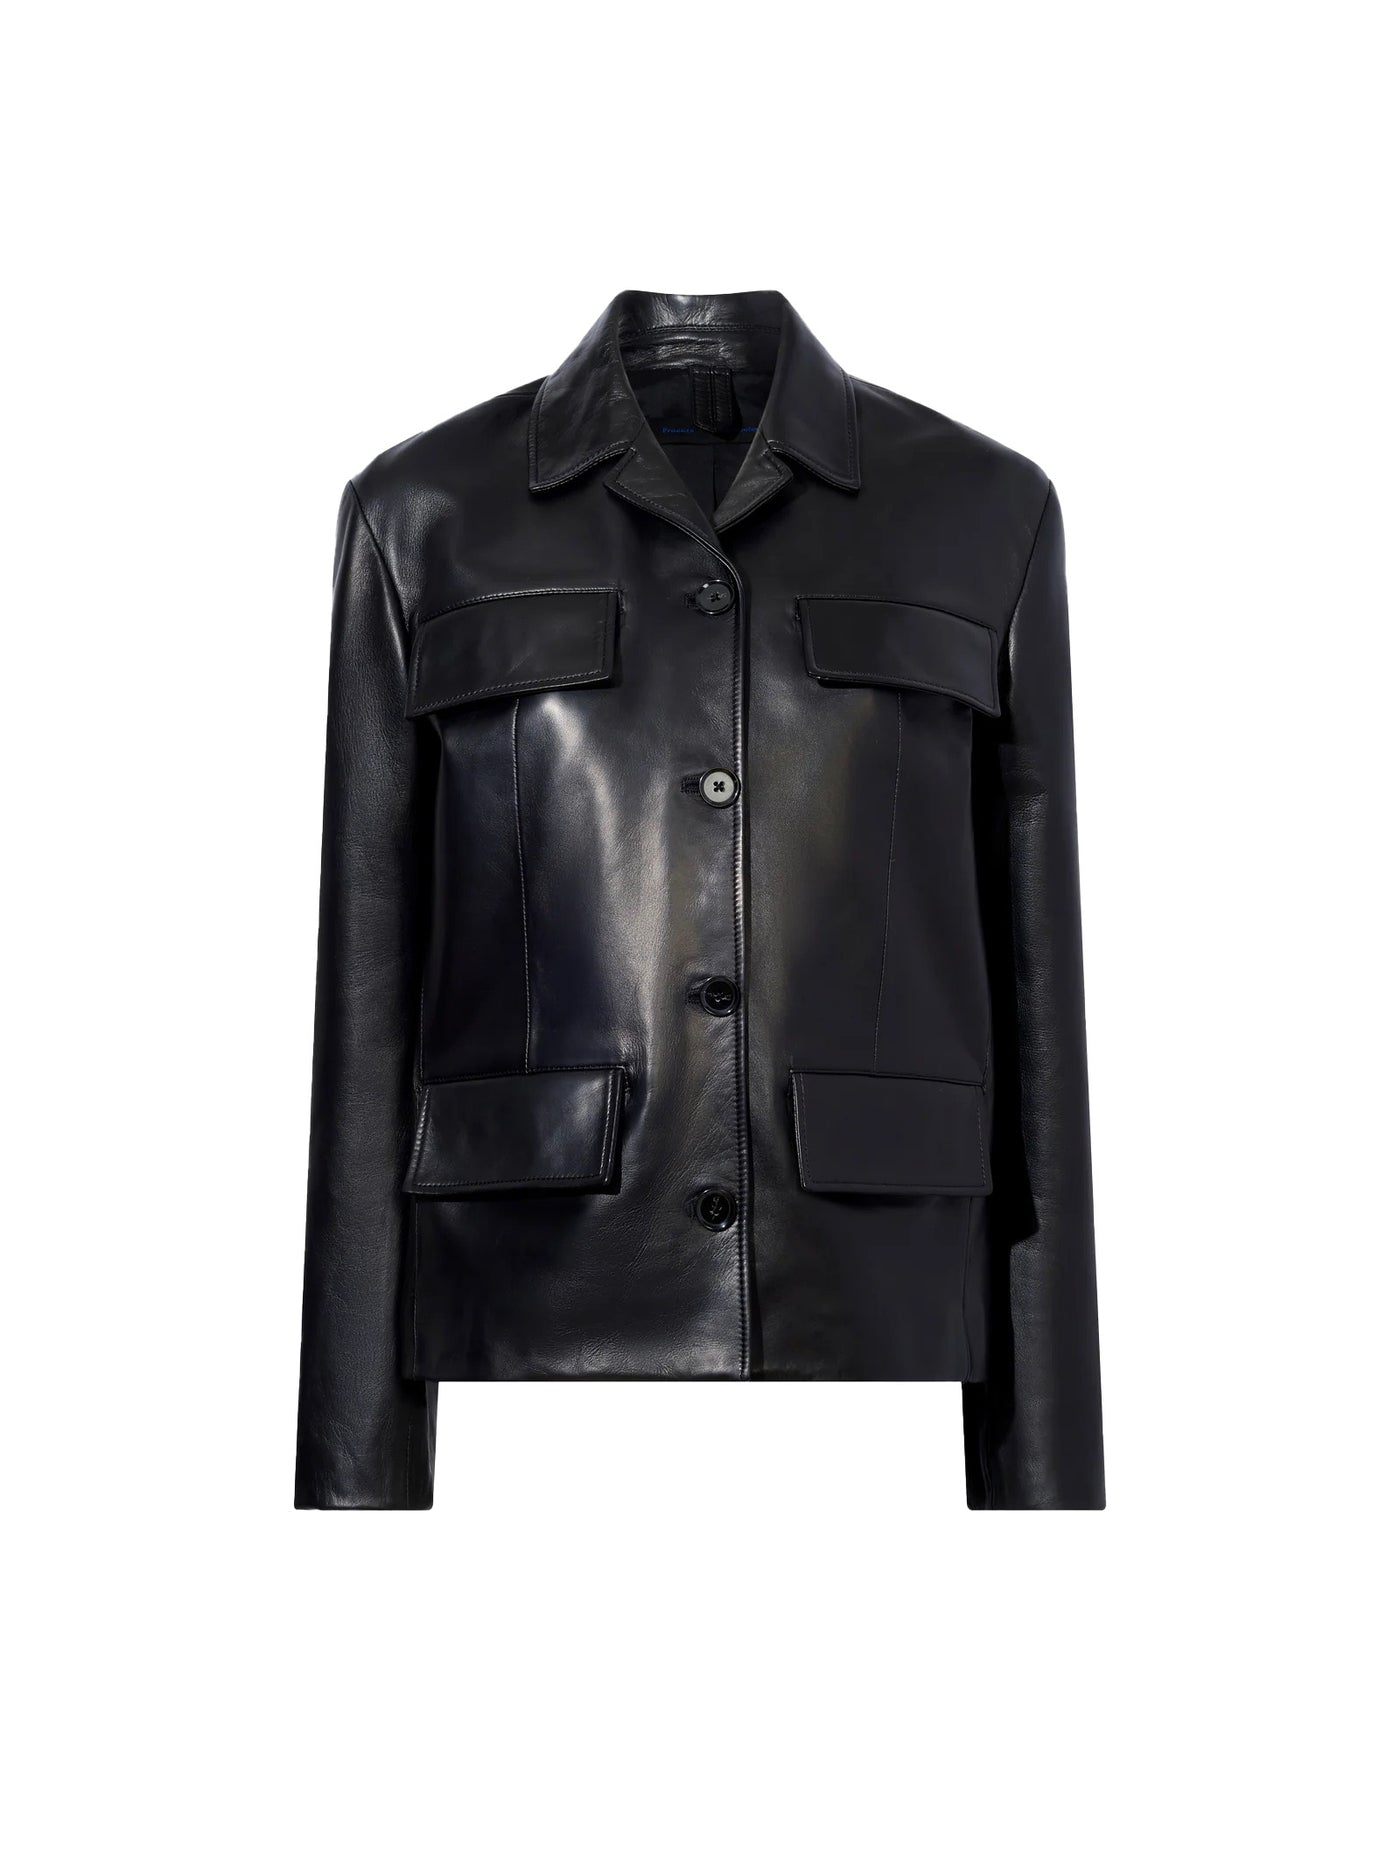 Roos Jacket in Black Leather